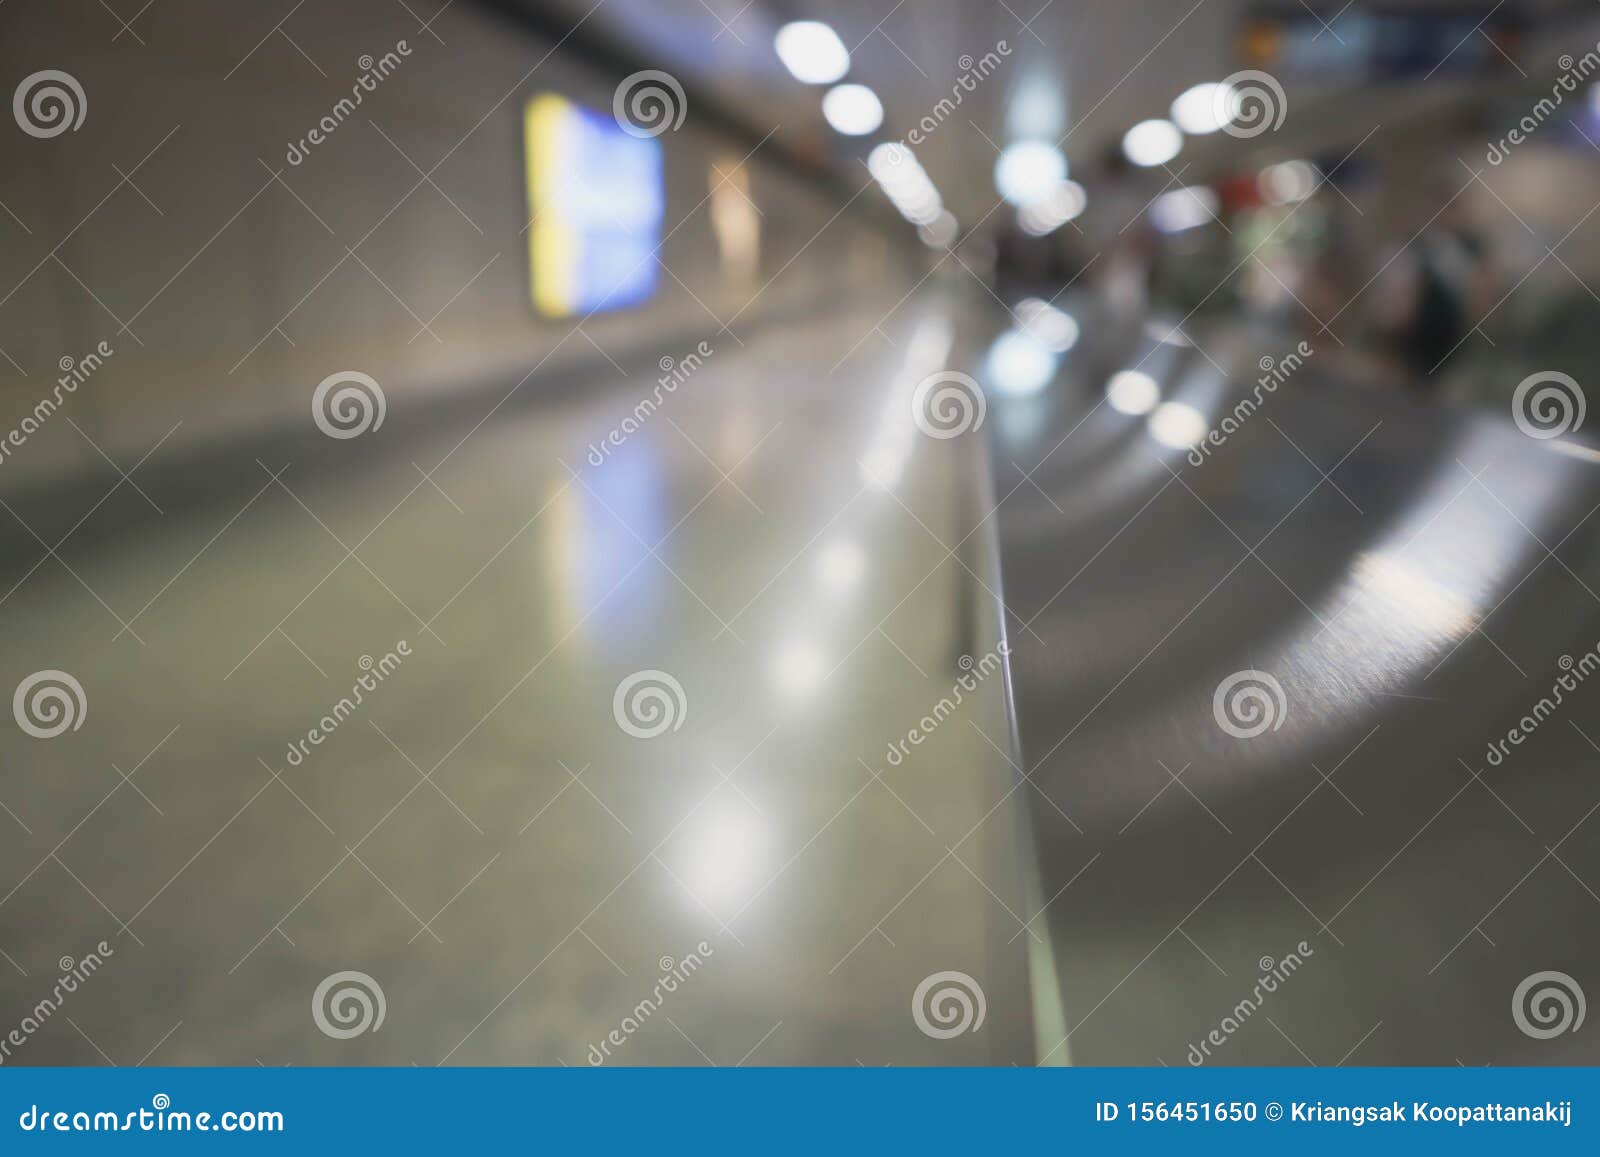 Blur Photo of Hand Rail, Walk Way and Background in Subway Stock Photo -  Image of dark, bright: 156451650